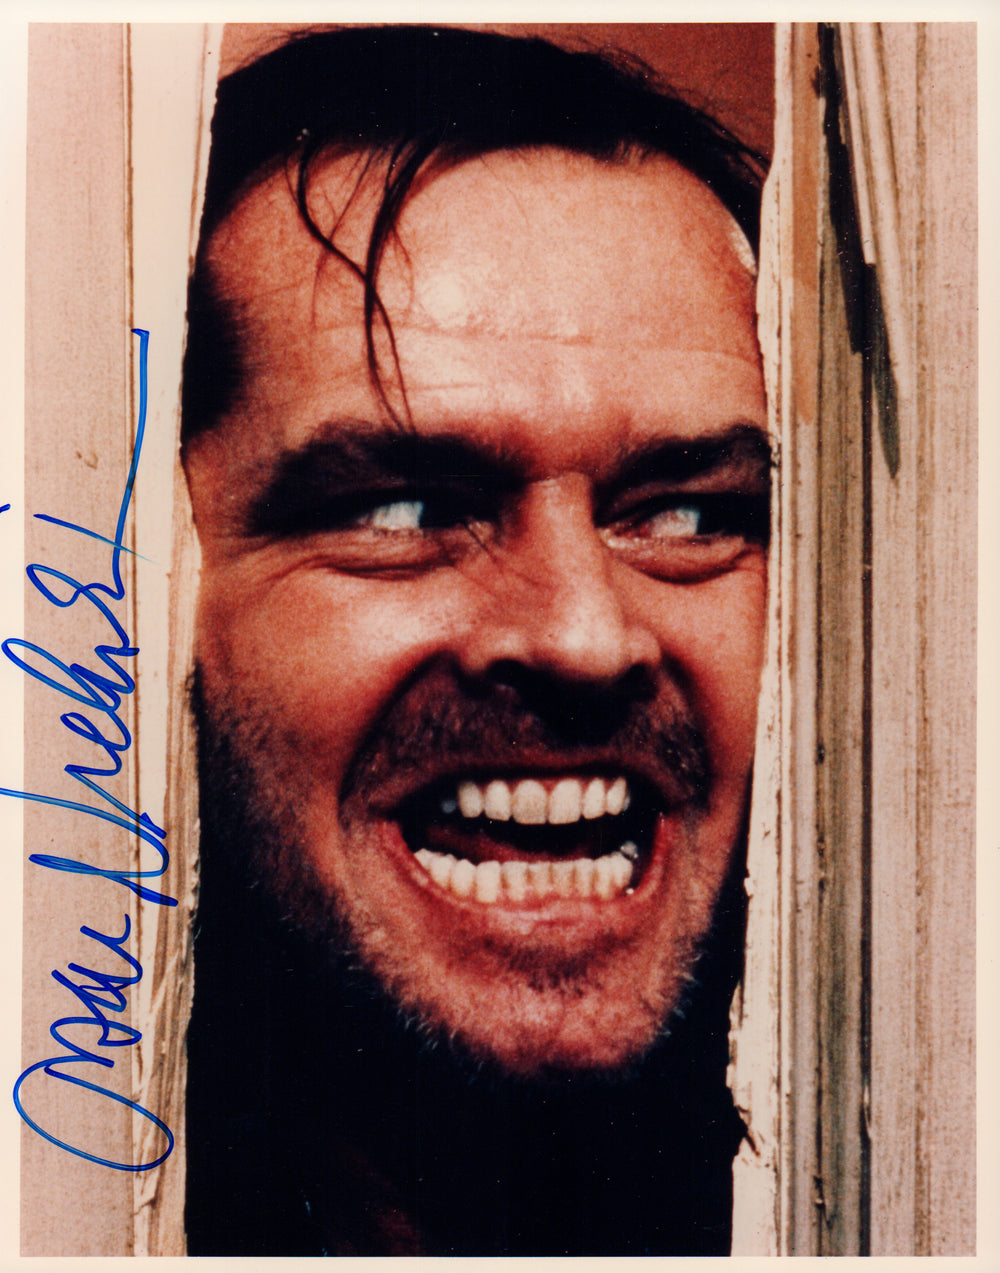 Jack Nicholson as Jack Torrance in The Shining 